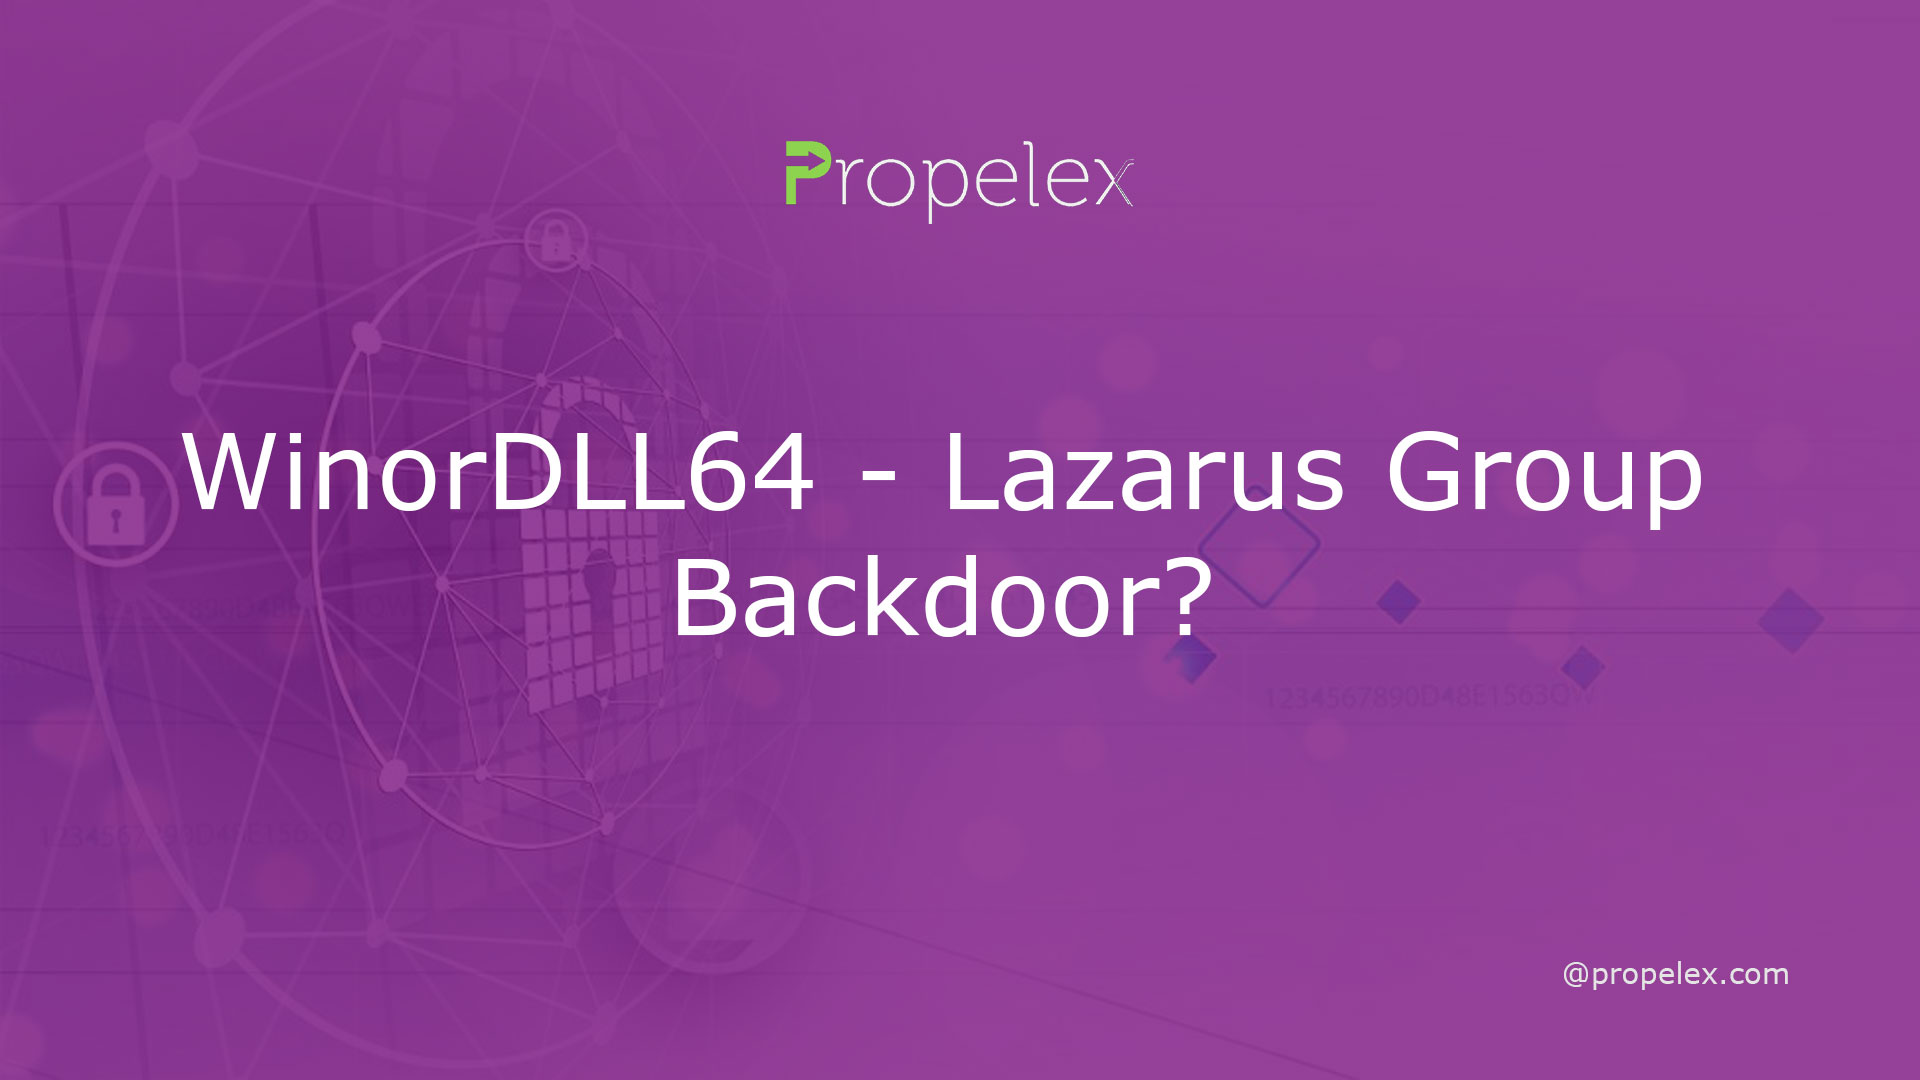 WinorDLL64 - Lazarus Group Backdoor